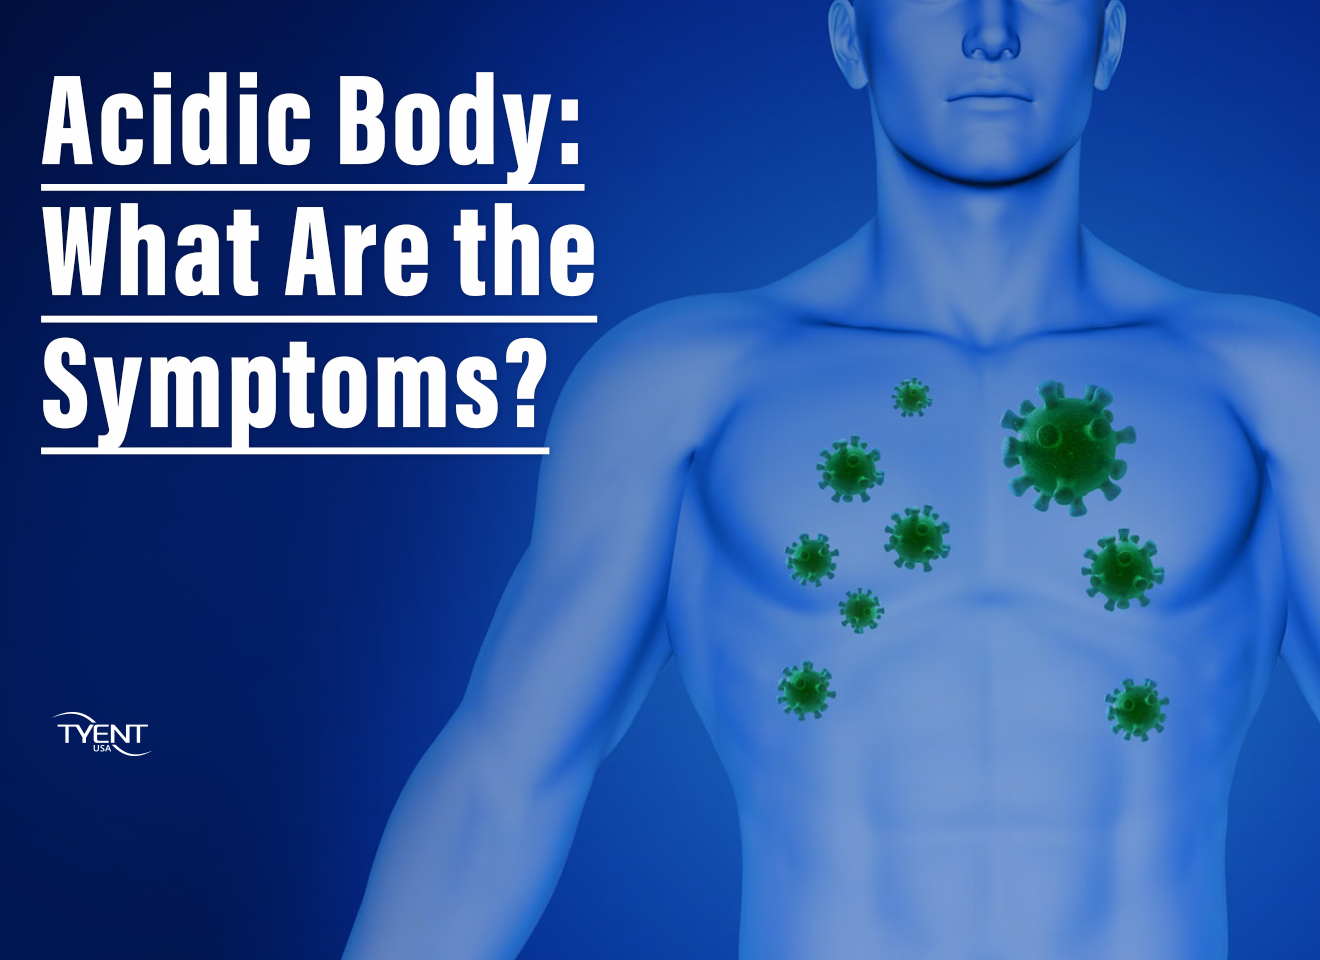 Acidic Body: What Are the Symptoms?